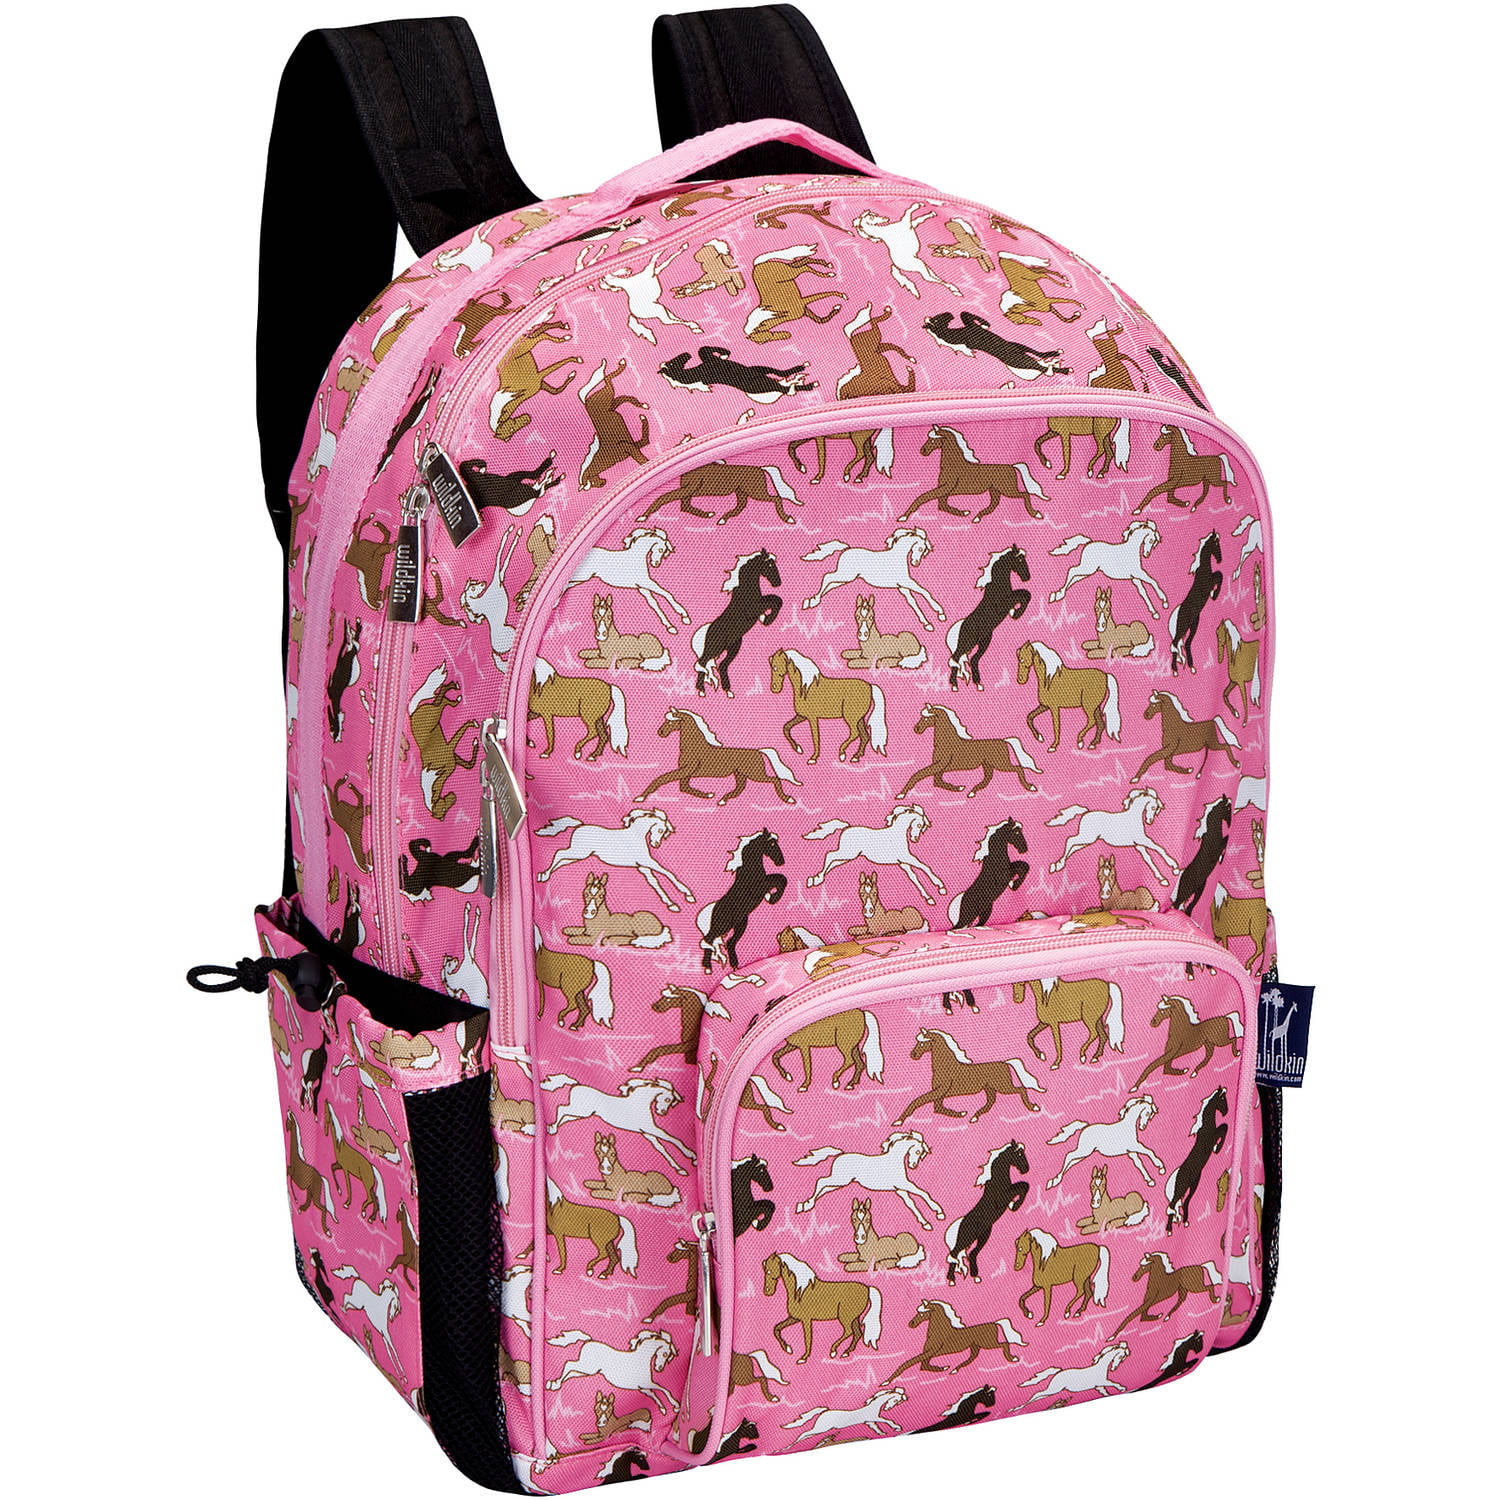 Wildkin - Wildkin Horses in Pink Macropak Kids Backpack for Boys and ...